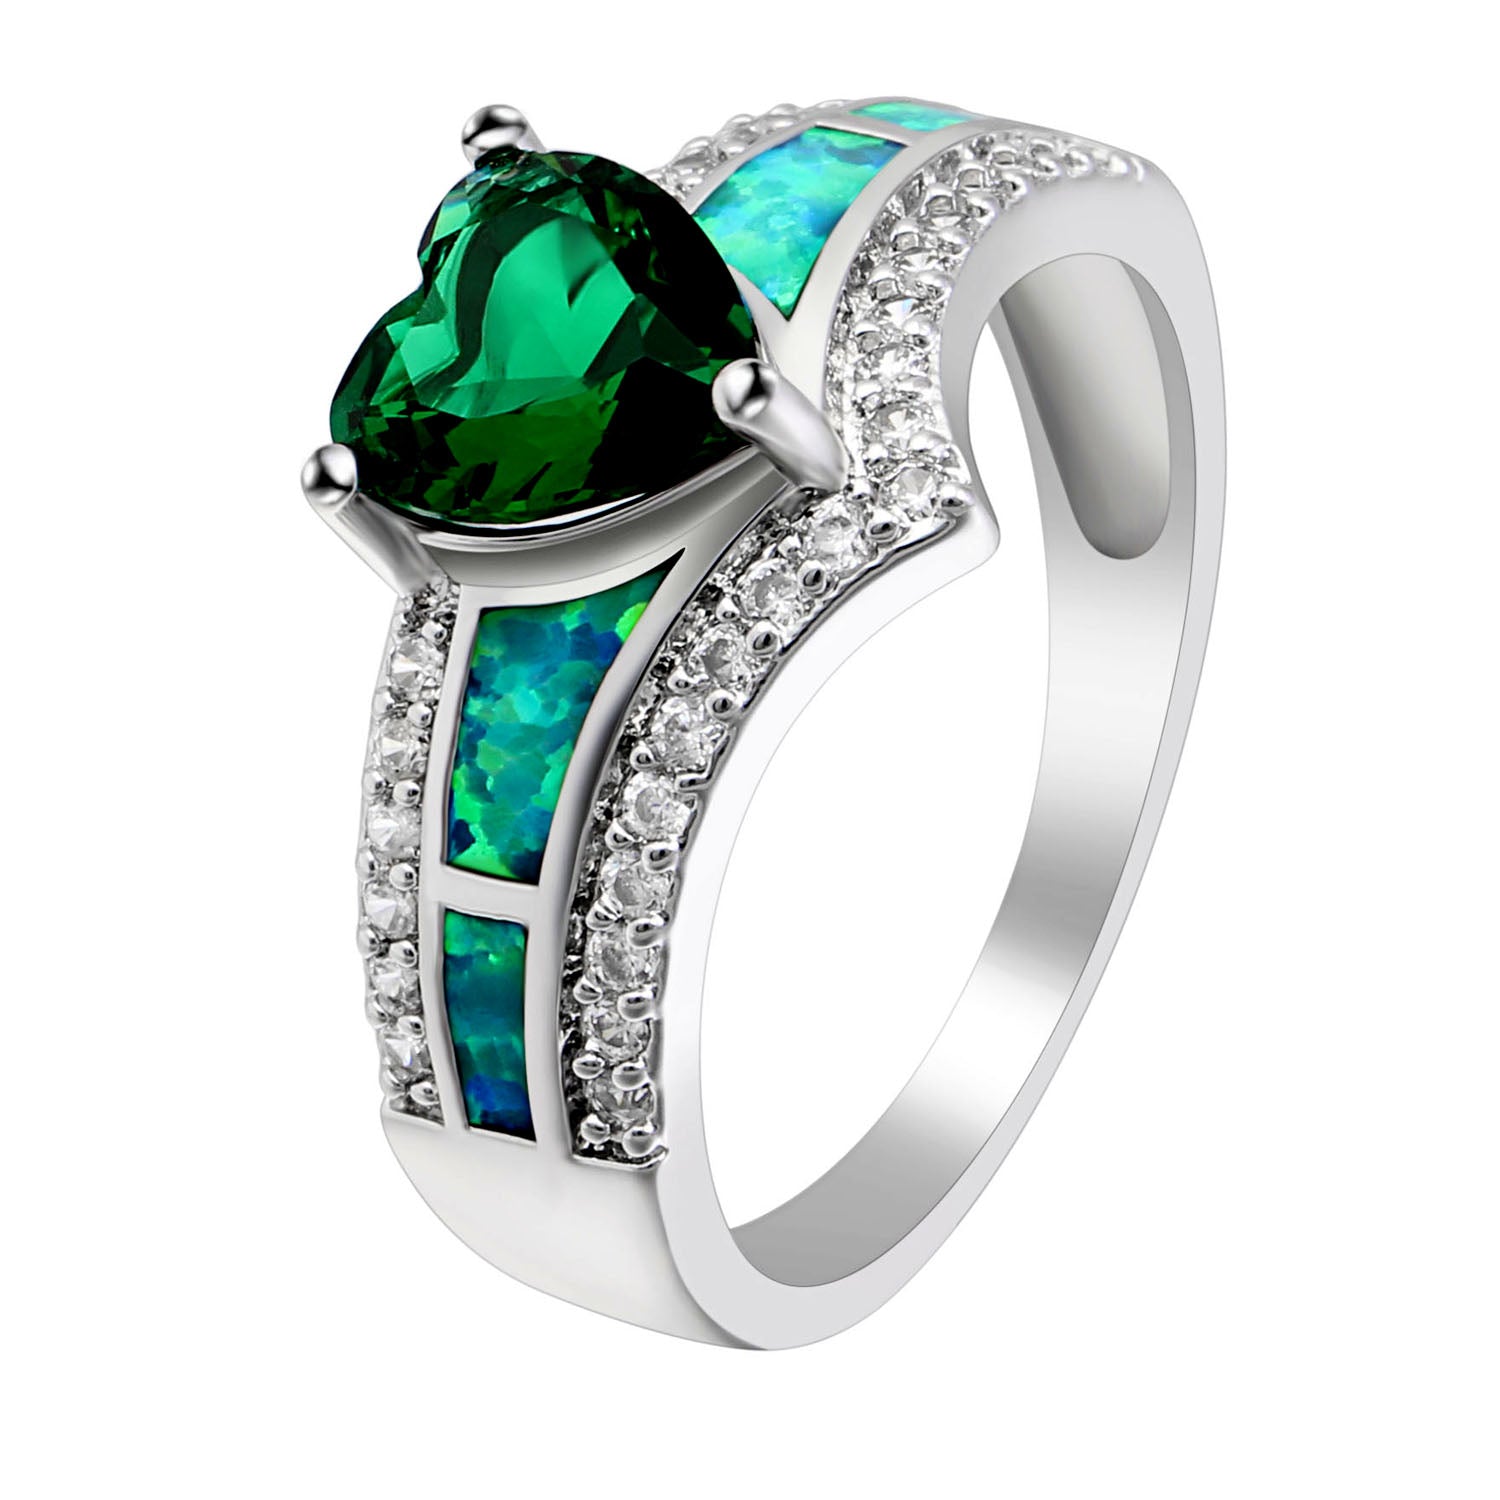 Majestic Heart Cz Promise Ring Created Fire Opal Girl Women Ginger Lyne - Green,12